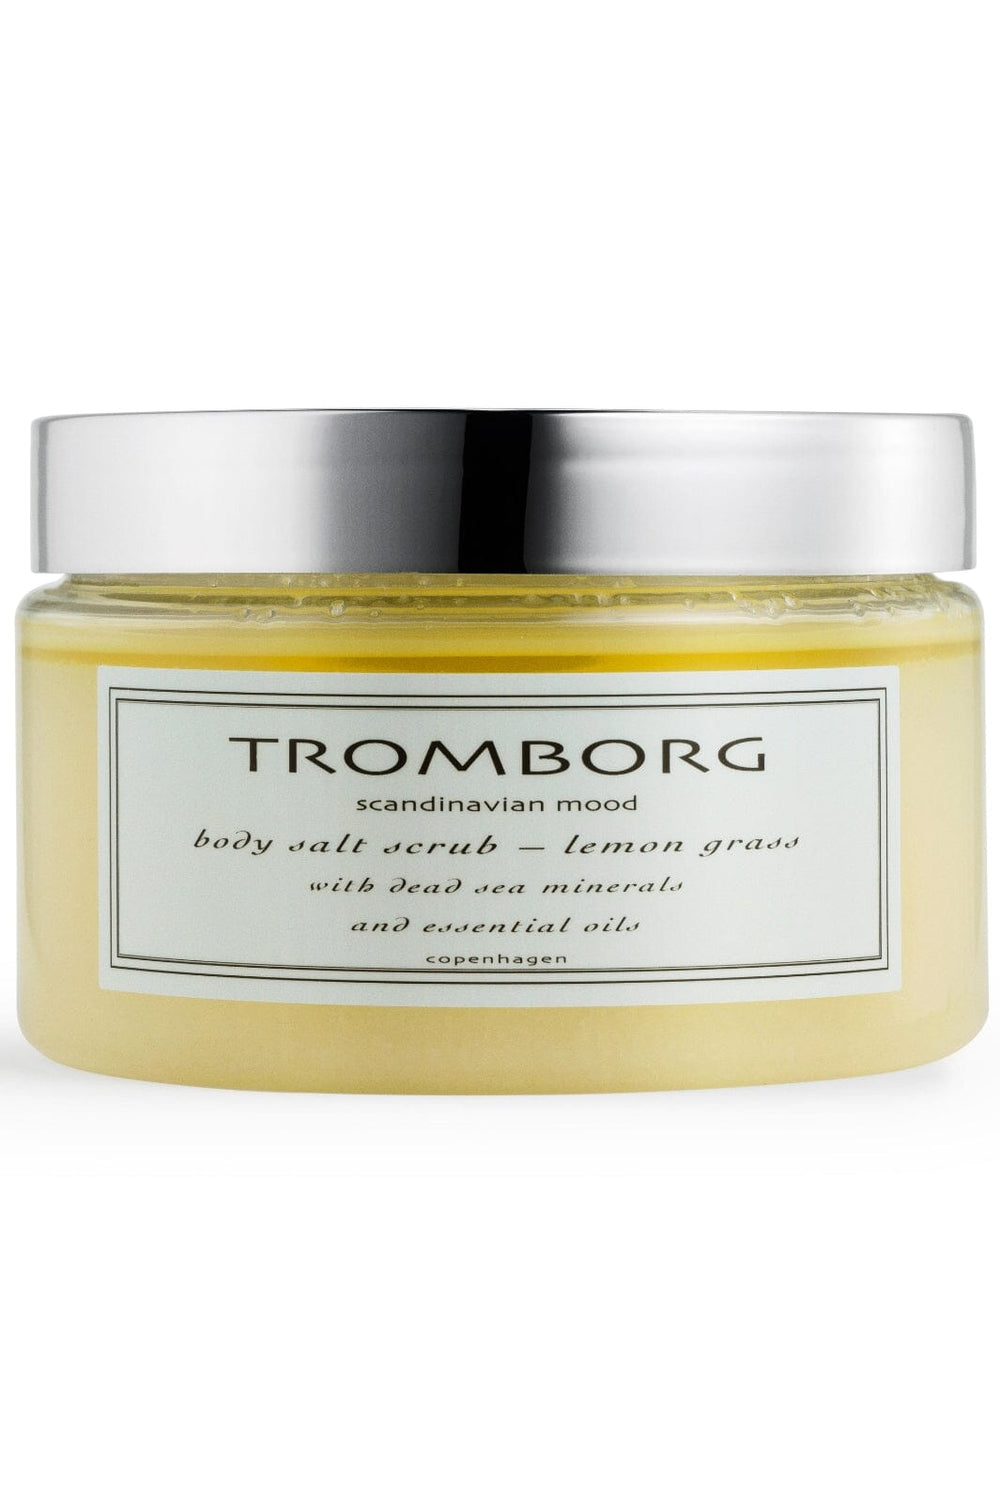 Tromborg - Body Salt Scrub - Lemon Grass Scrub 